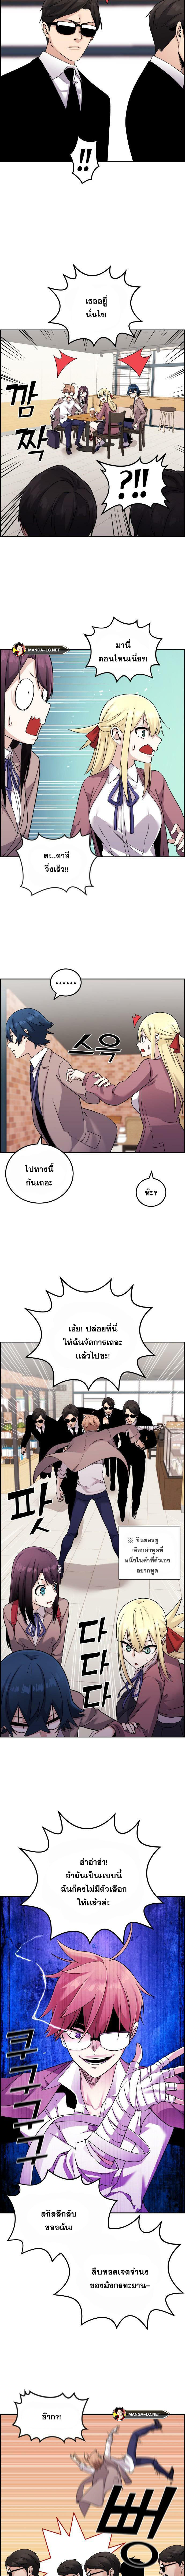 Webtoon Character Na Kang Lim ร ยธโ€ขร ยธยญร ยธโขร ยธโ€”ร ยธยตร ยนห 32 (7)